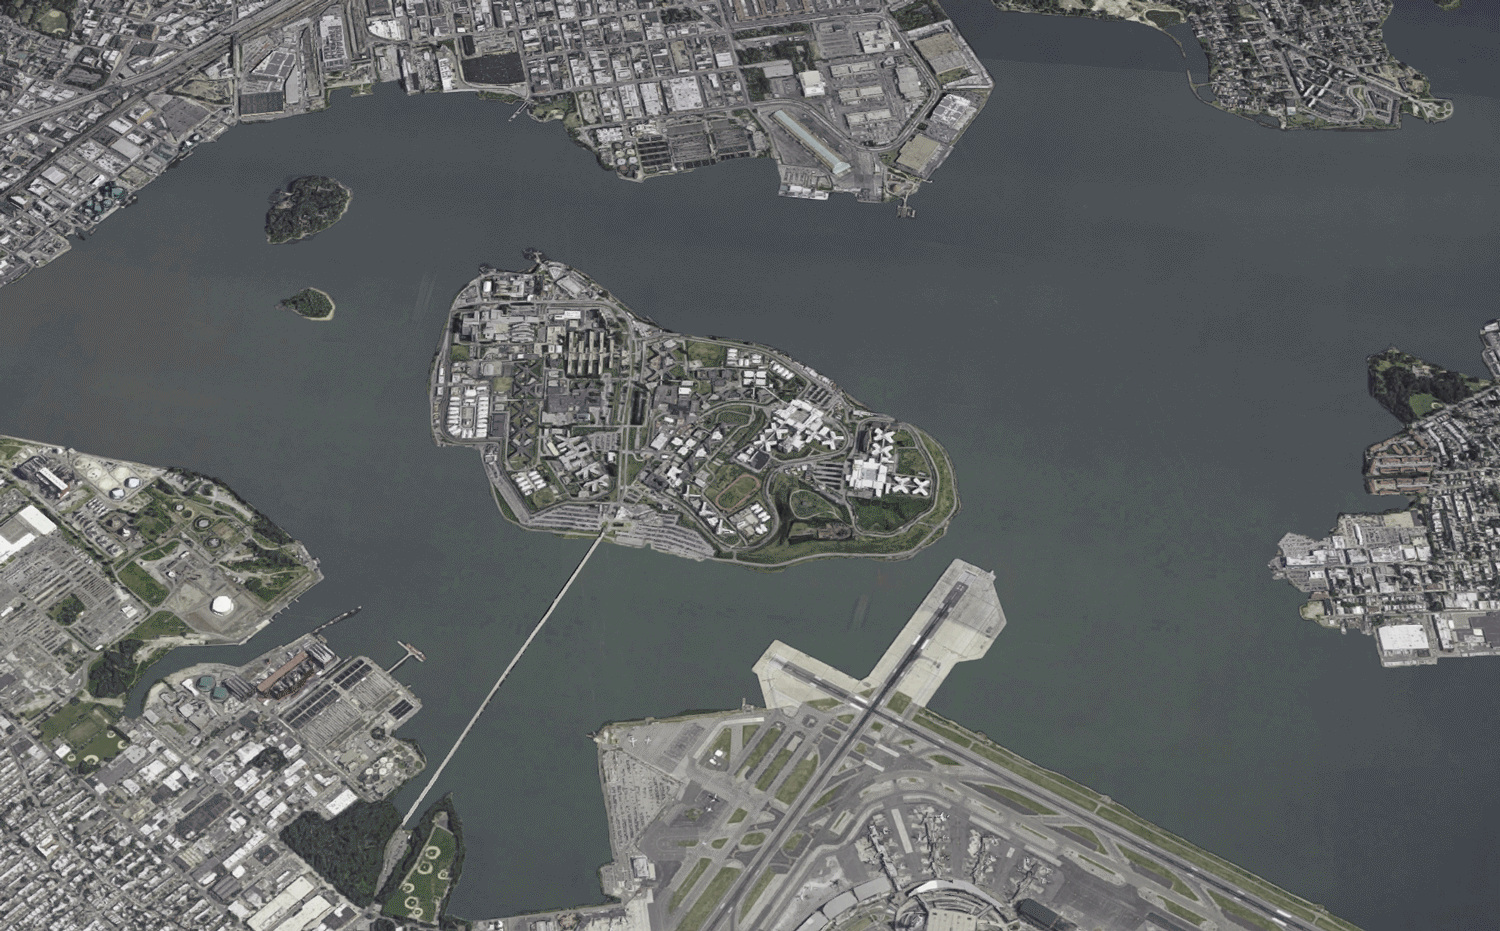 Rikers Island Dismantlement GIF-Mark-Henry Decrausaz-Columbia University GSAPP-NYC-2